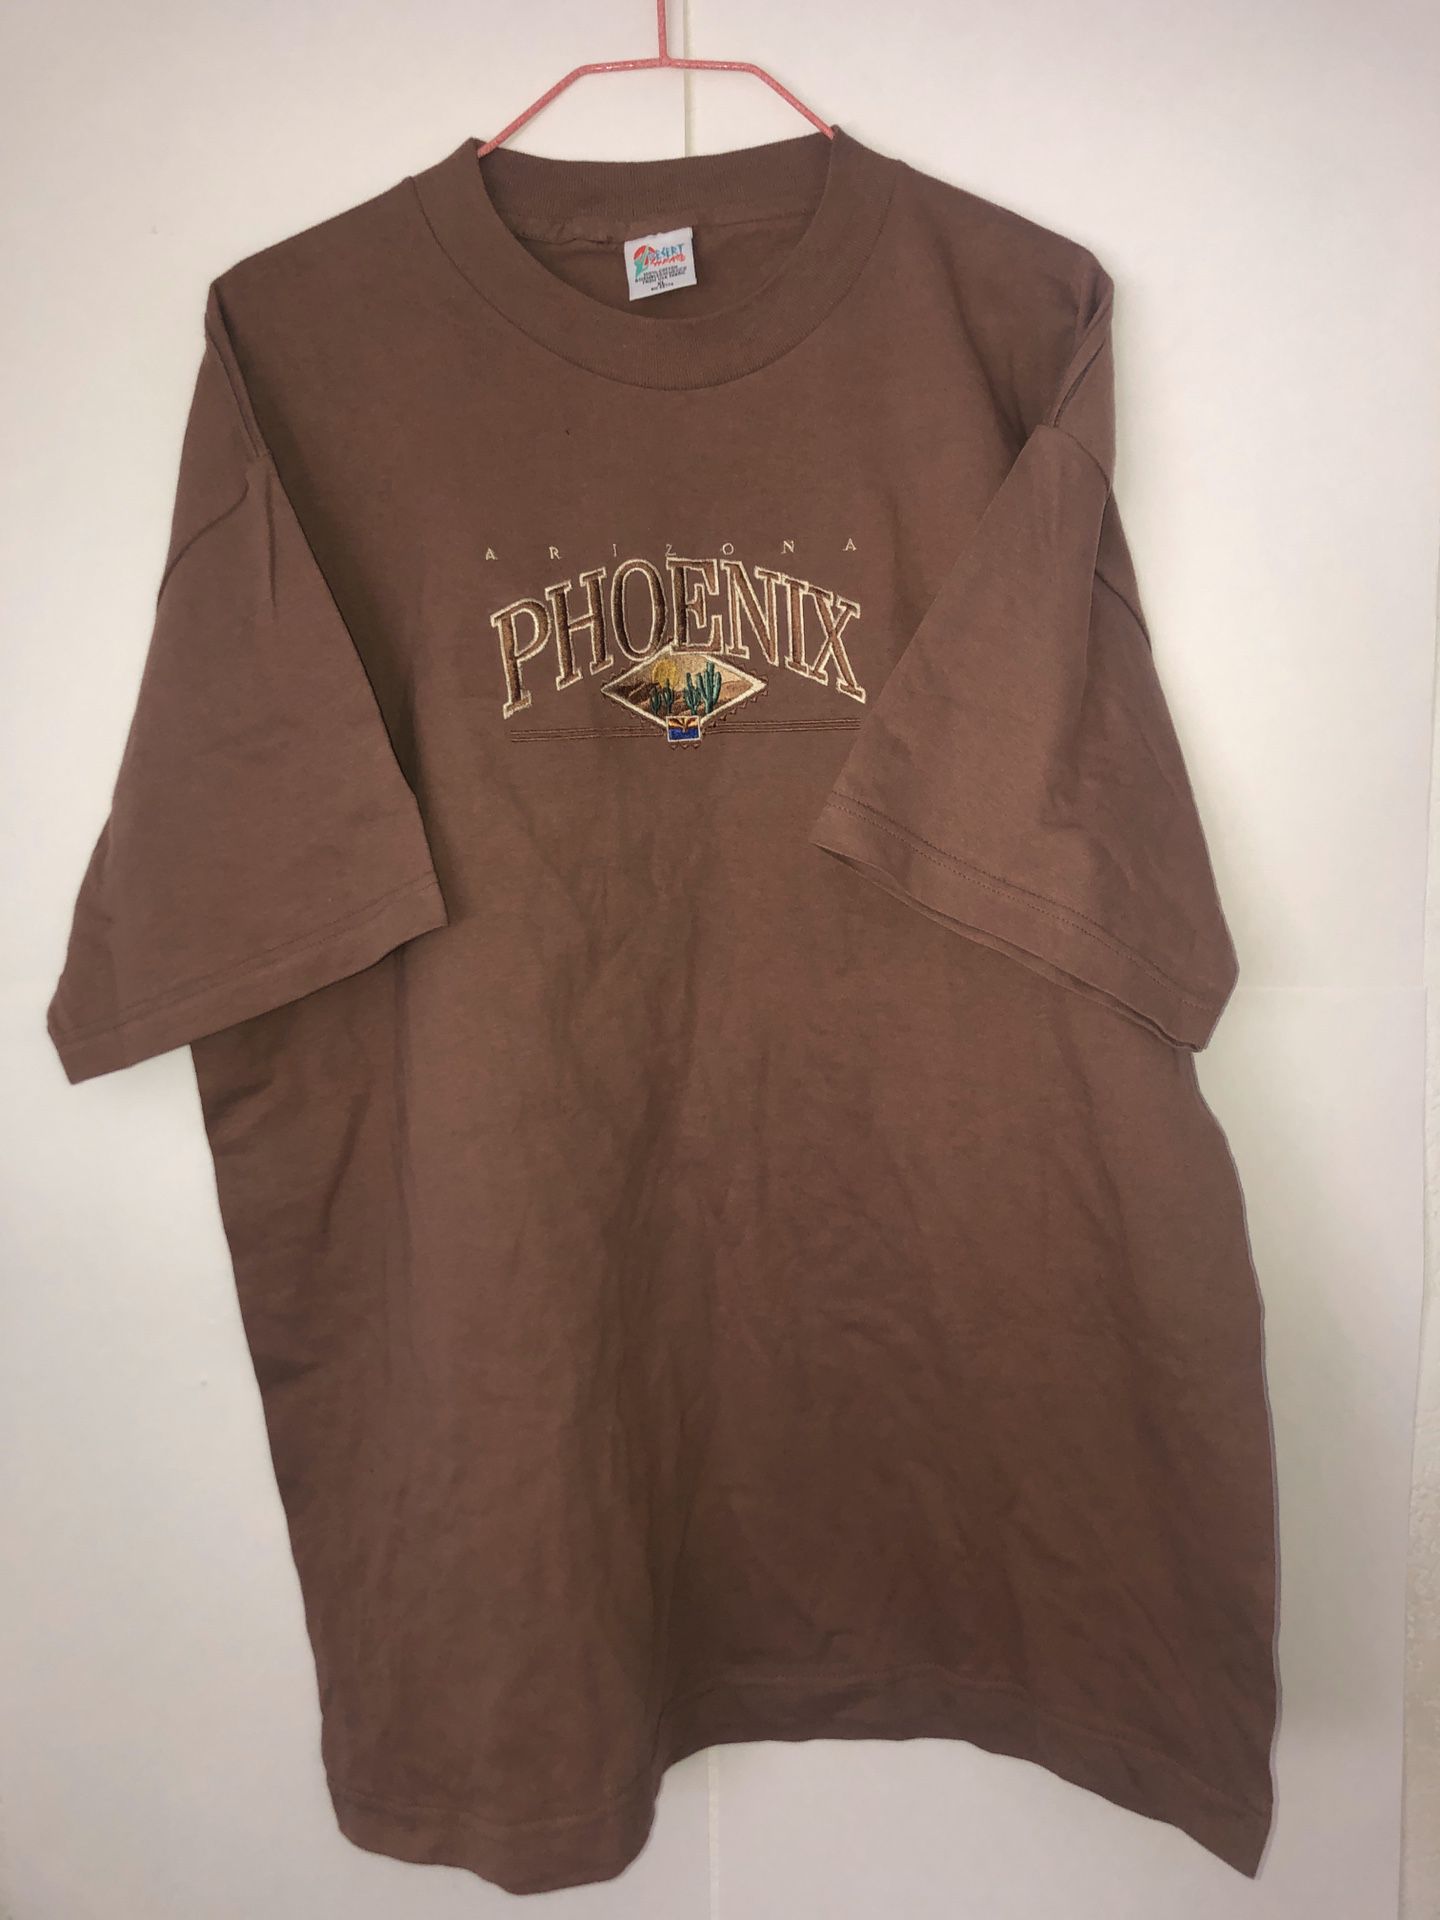 Vintage Phoenix Arizona shirt XL Cactus Jack Travis Scott -esque dookie brown